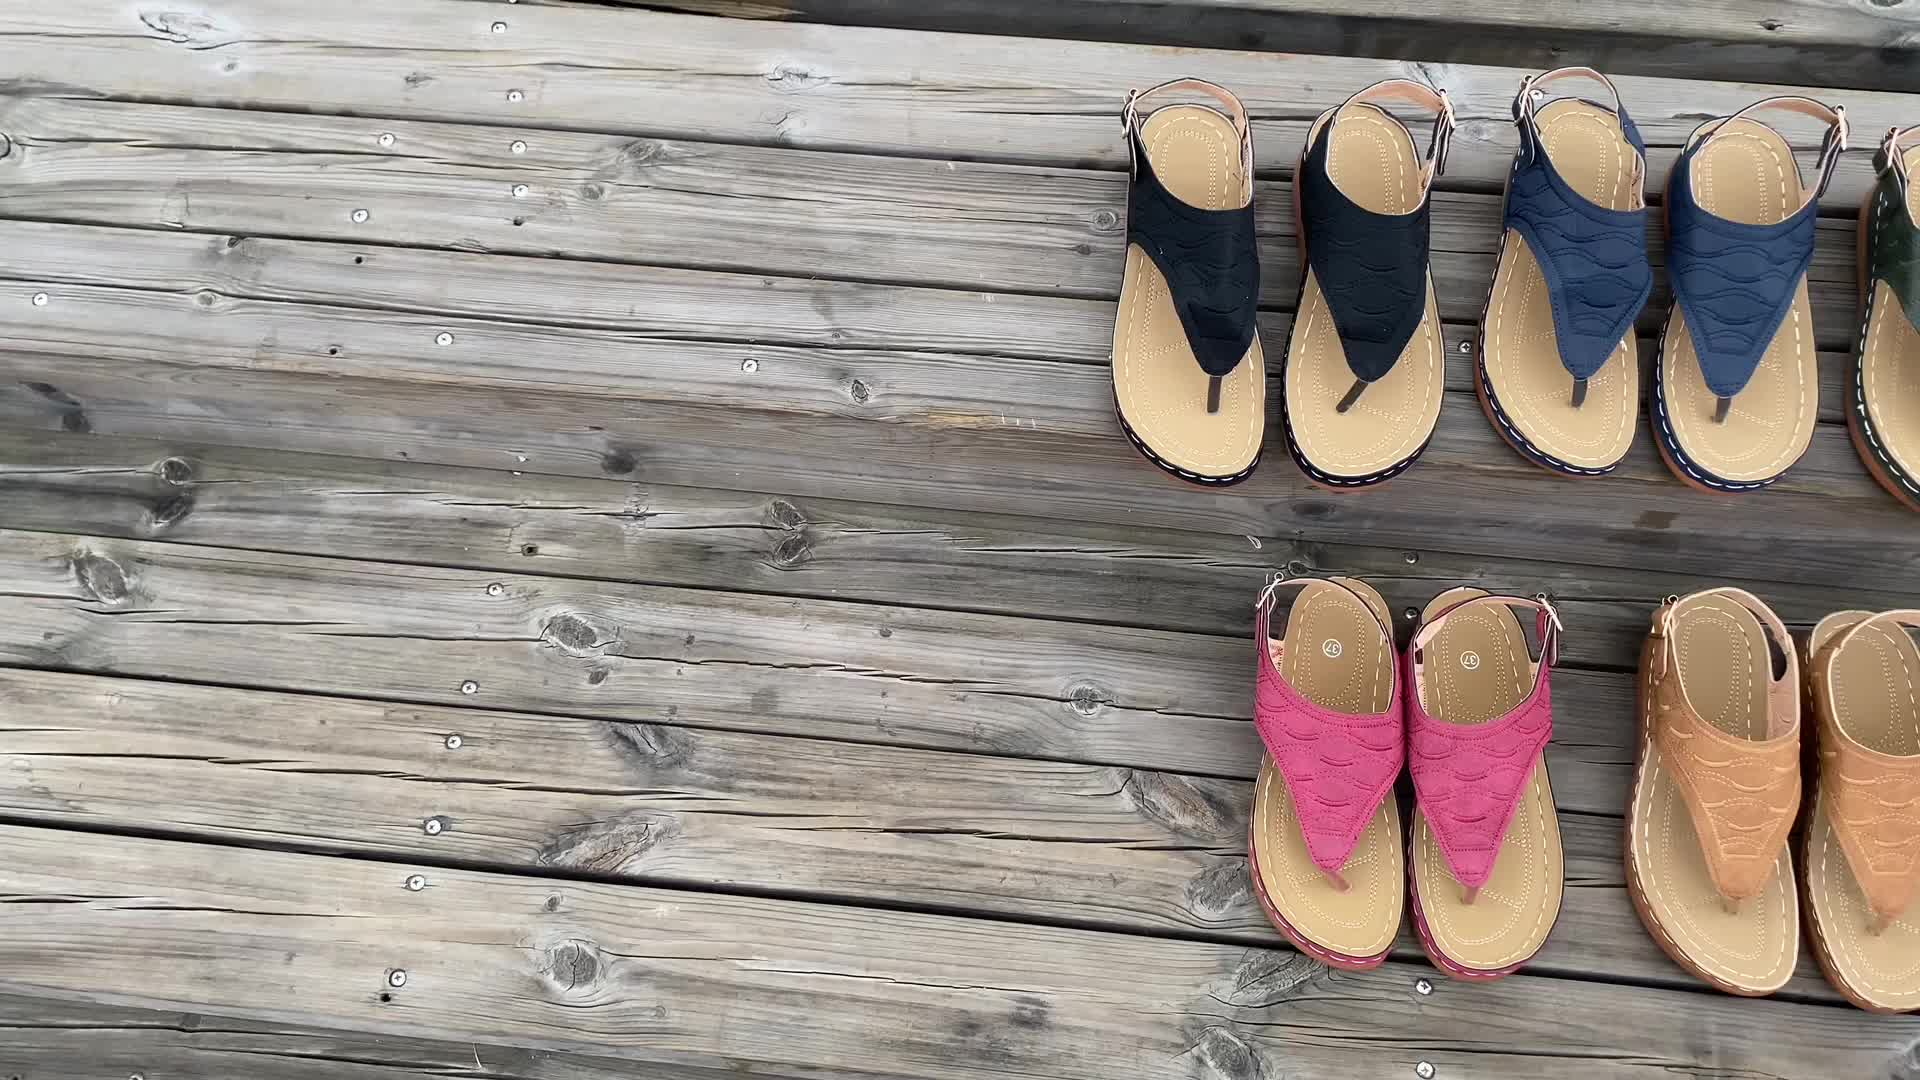 WWricotta Sandalias Plataforma Mujer - Sandalias Cangrejeras Mujer Fondo  Plano Zapatos De Playa Forrada De Yute Andalias De TacóN Alto Zapatos  Zapatos